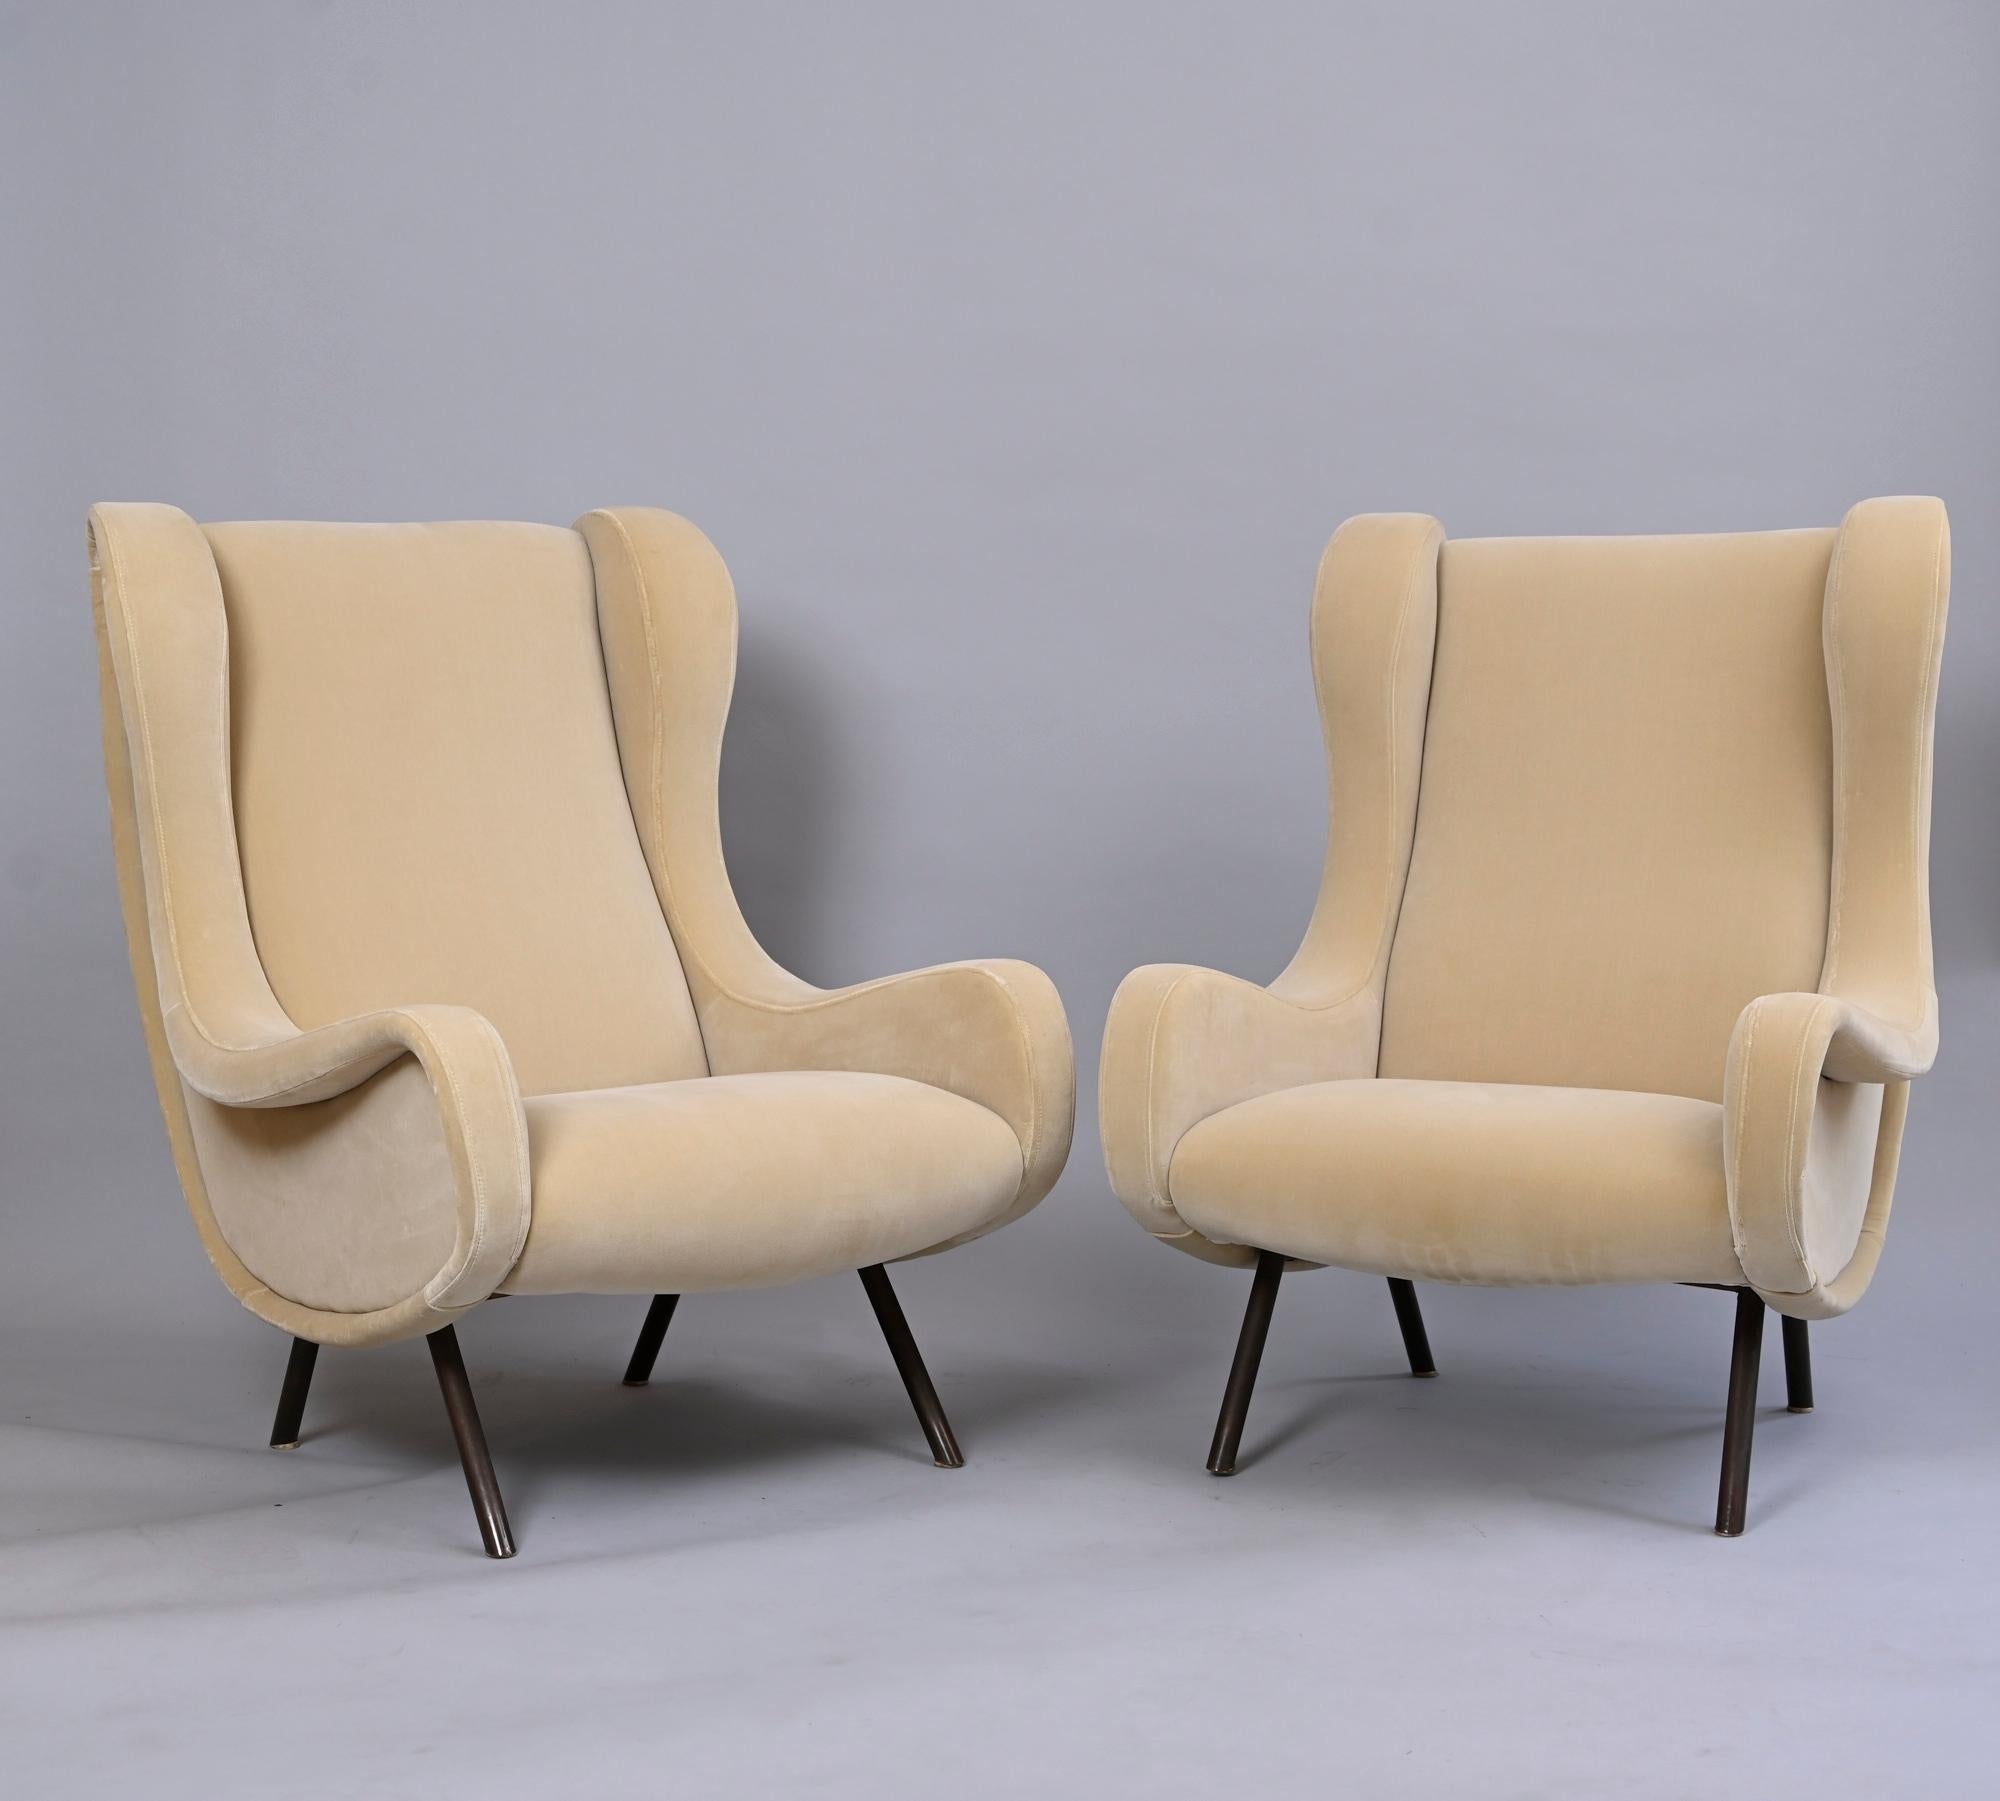 Original Marco Zanuso 'Senior' armchairs for Arflex. Italy c1950. 

Re upholstered in a soft 'greige' colour velvet. (Neutral beige / grey).

